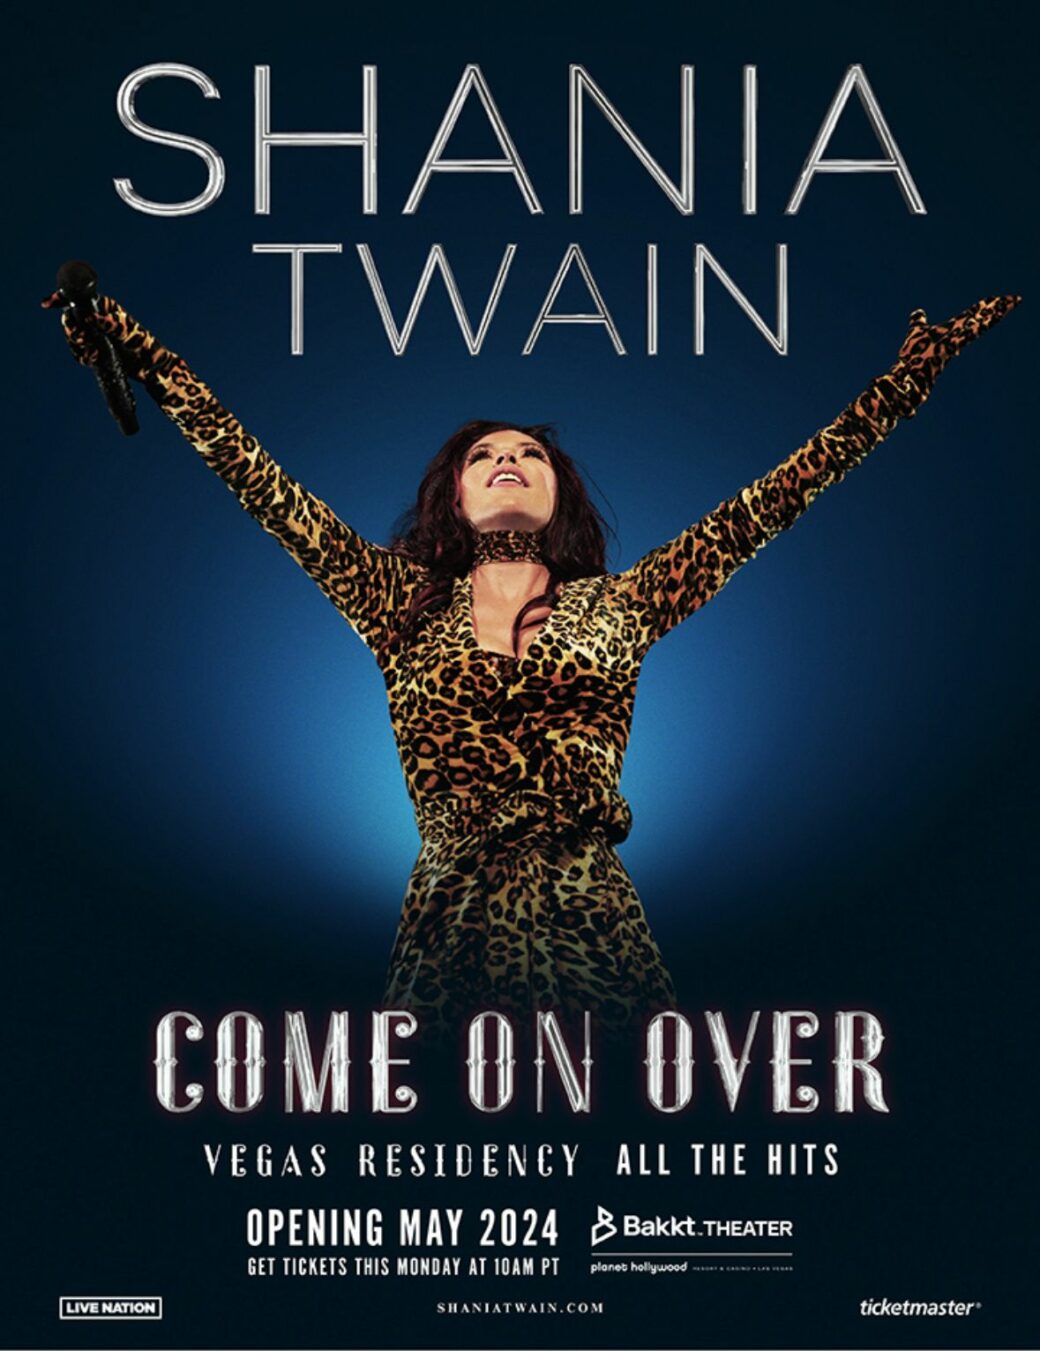 Shania Twain announces new Las Vegas residency - Attitude